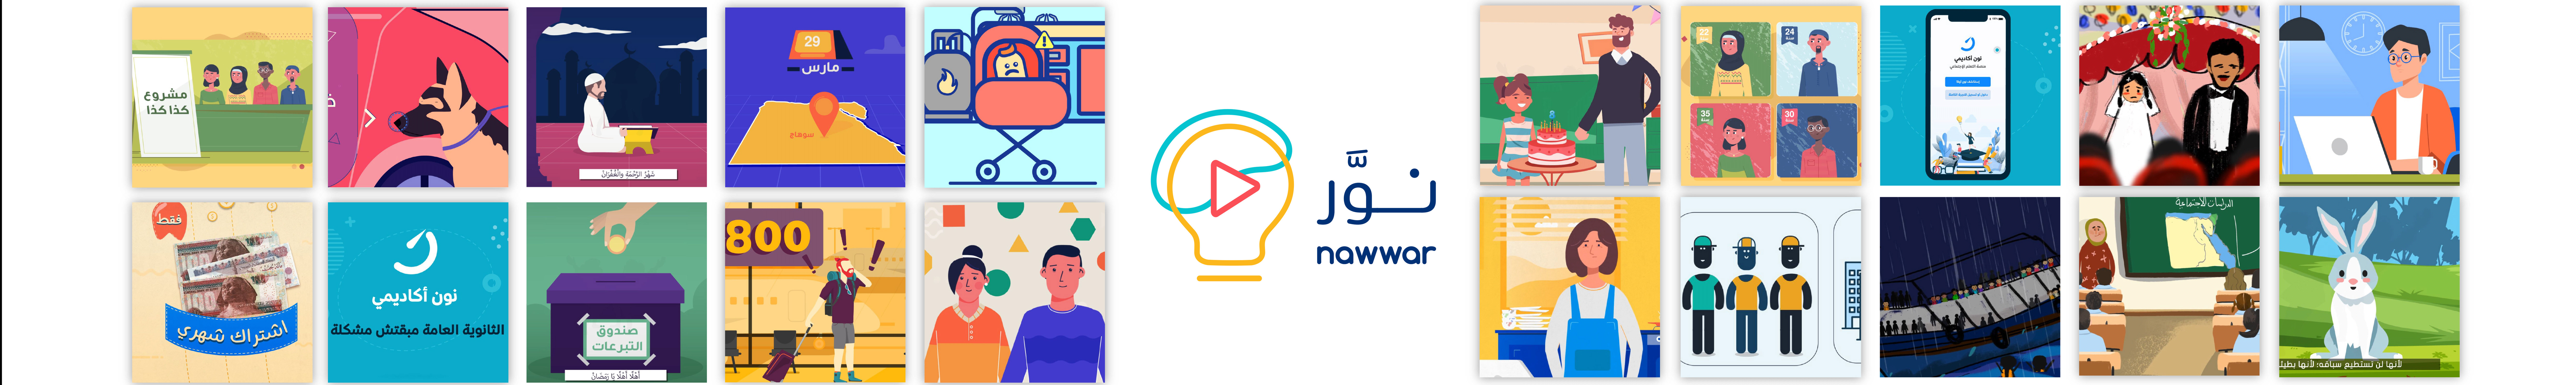 Nawwar Studio's profile banner